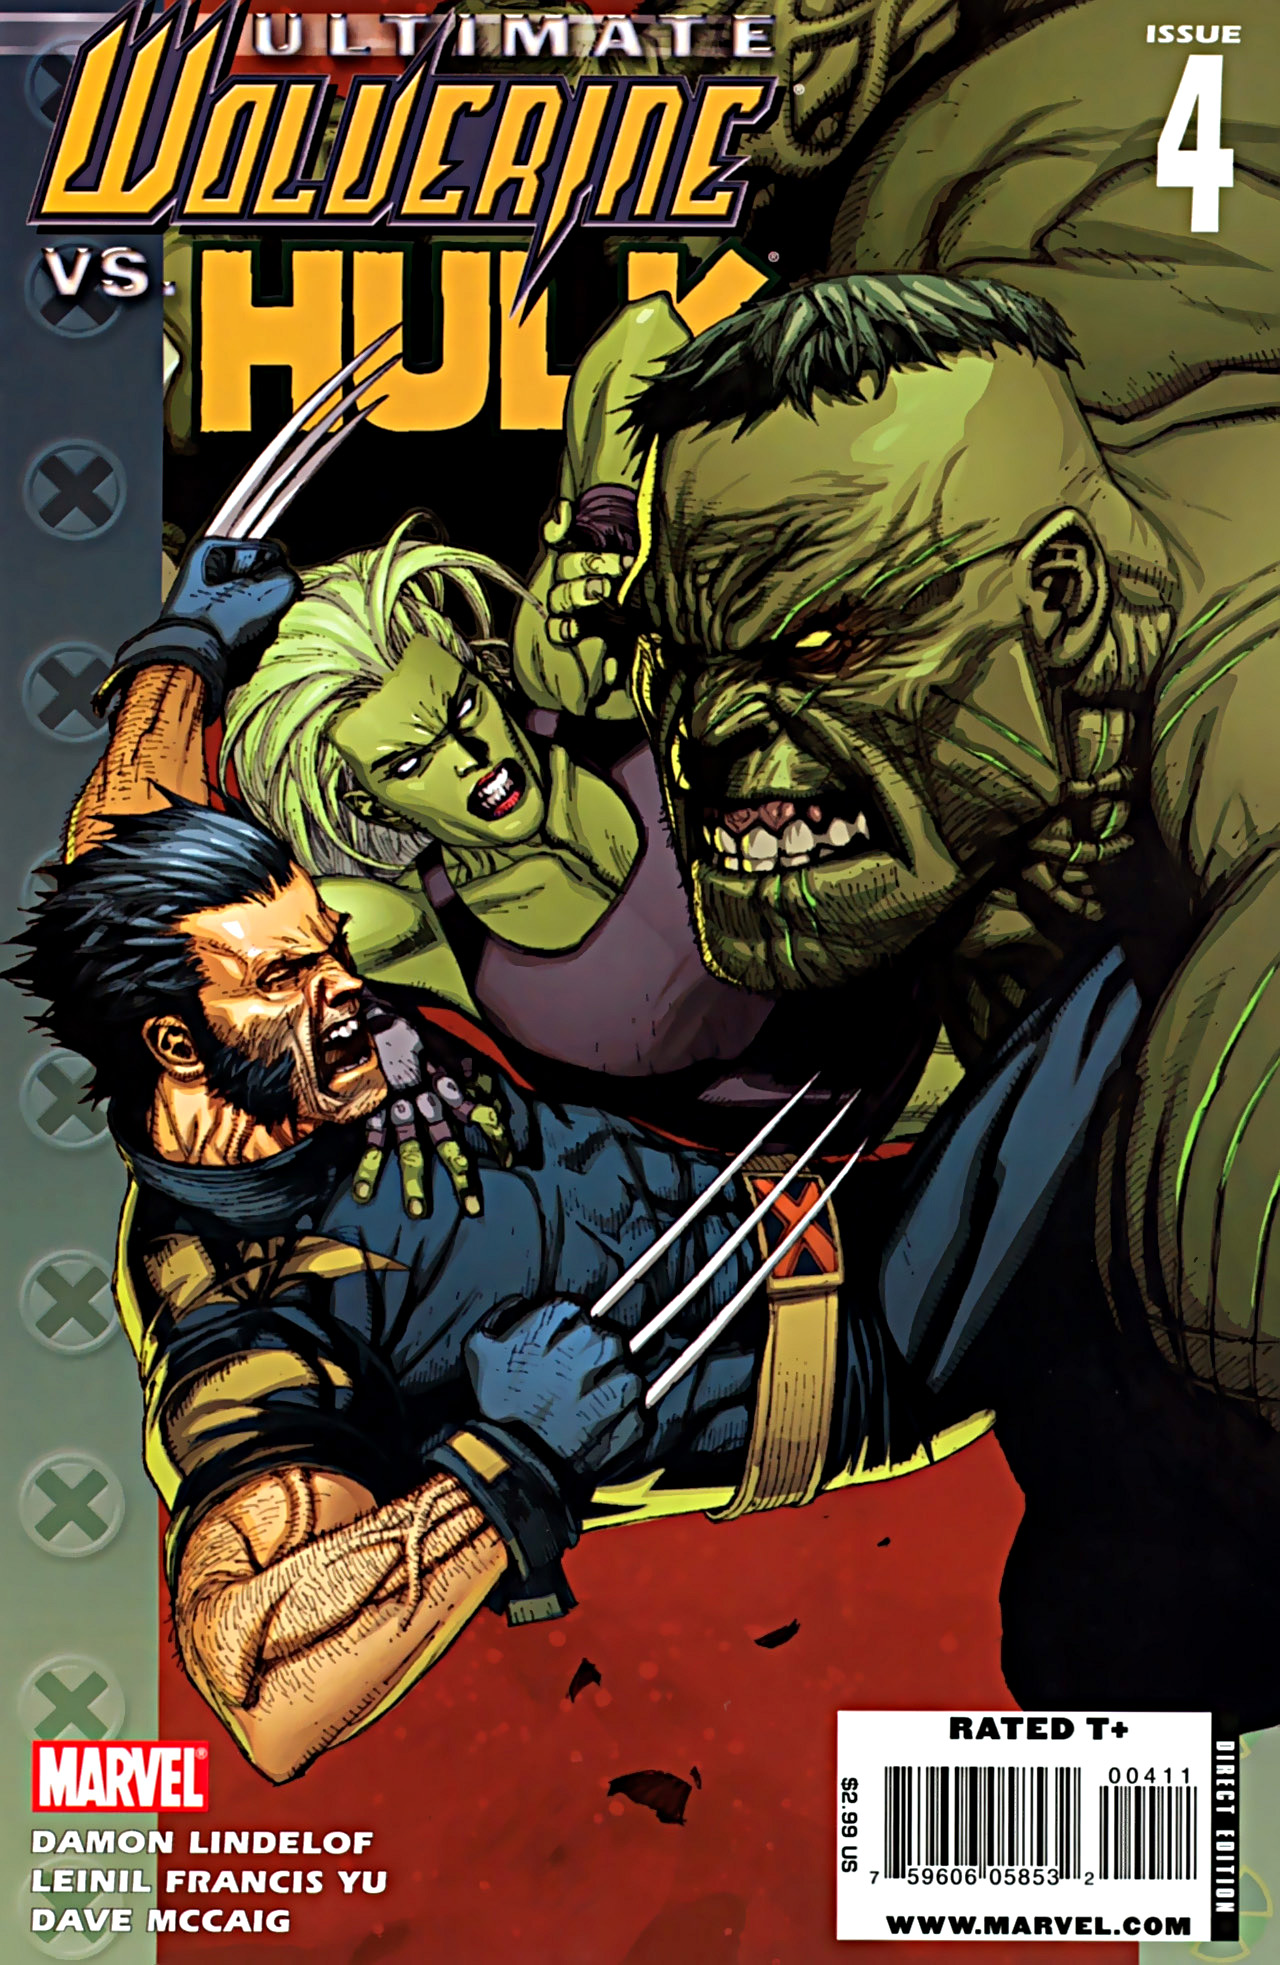 Read online Ultimate Wolverine vs. Hulk comic -  Issue #4 - 1